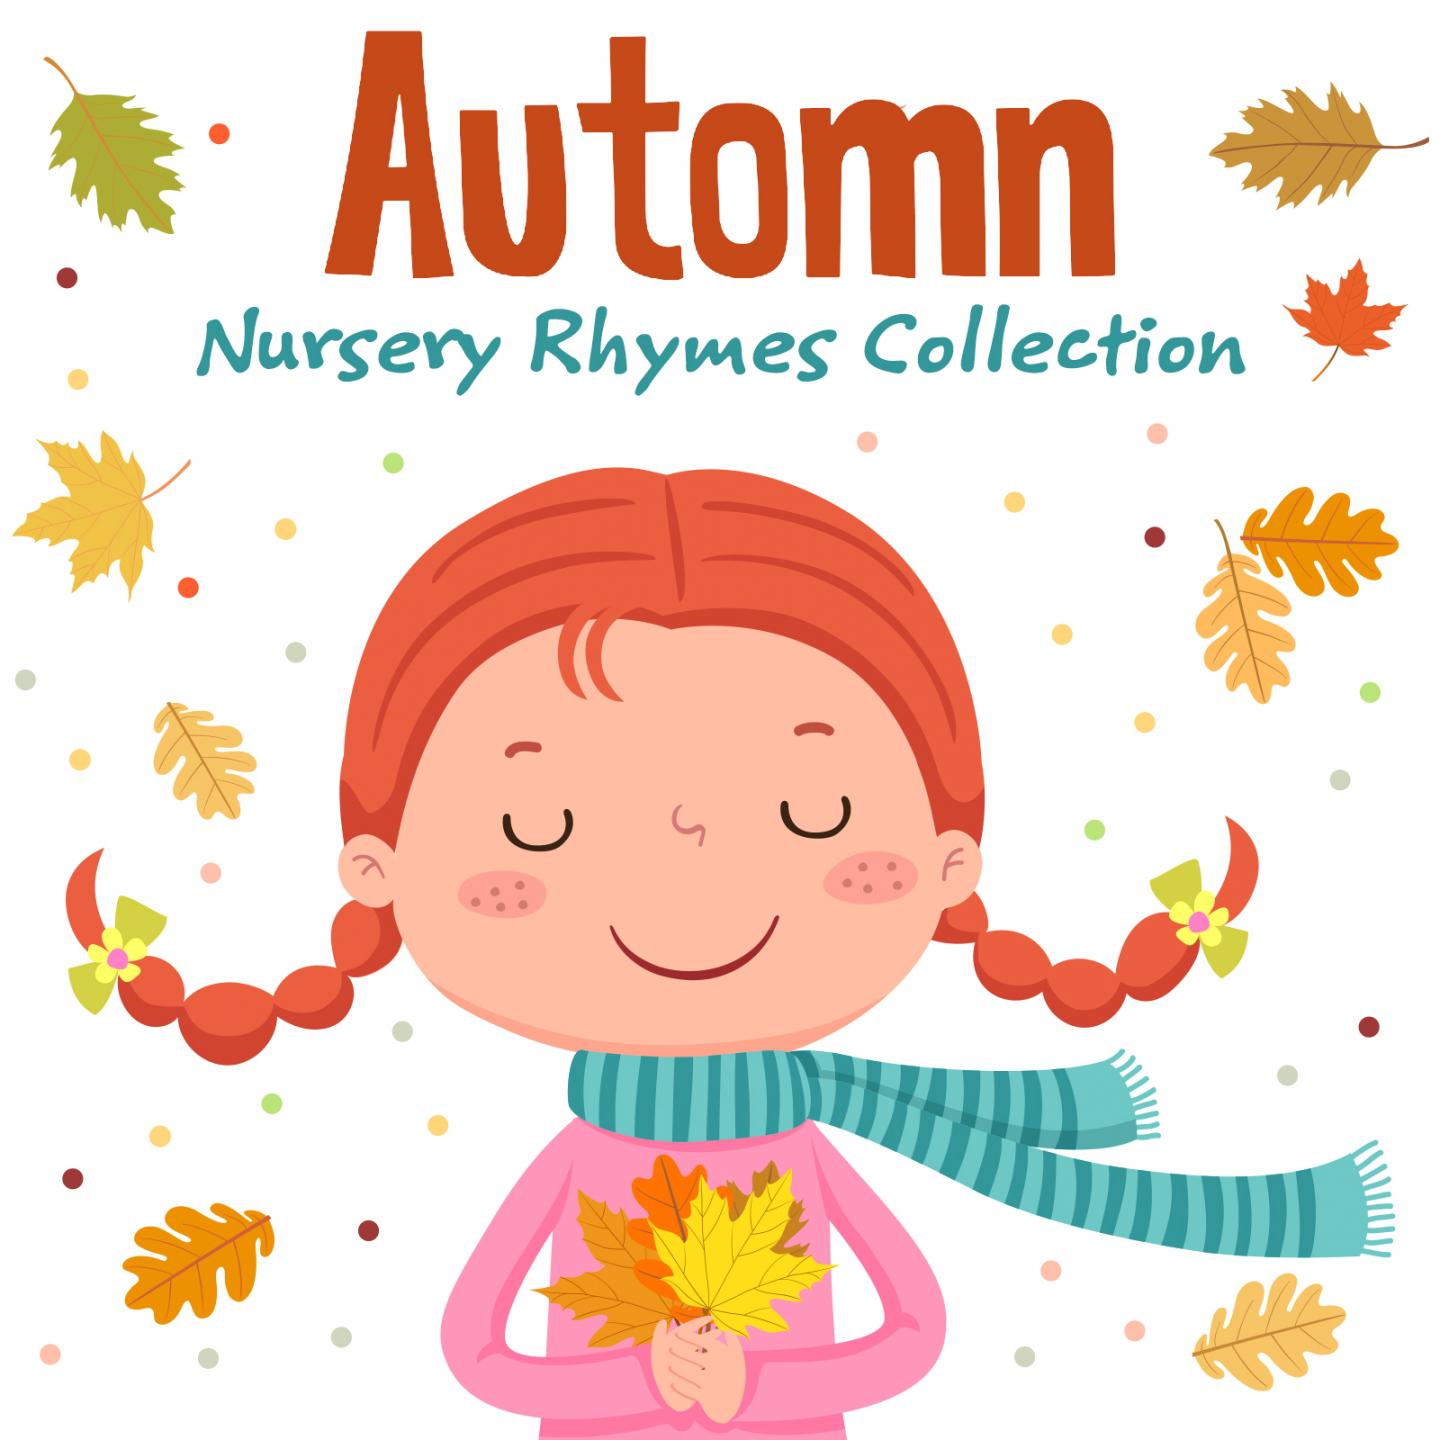 Autumn Nursery Rhymes Collection